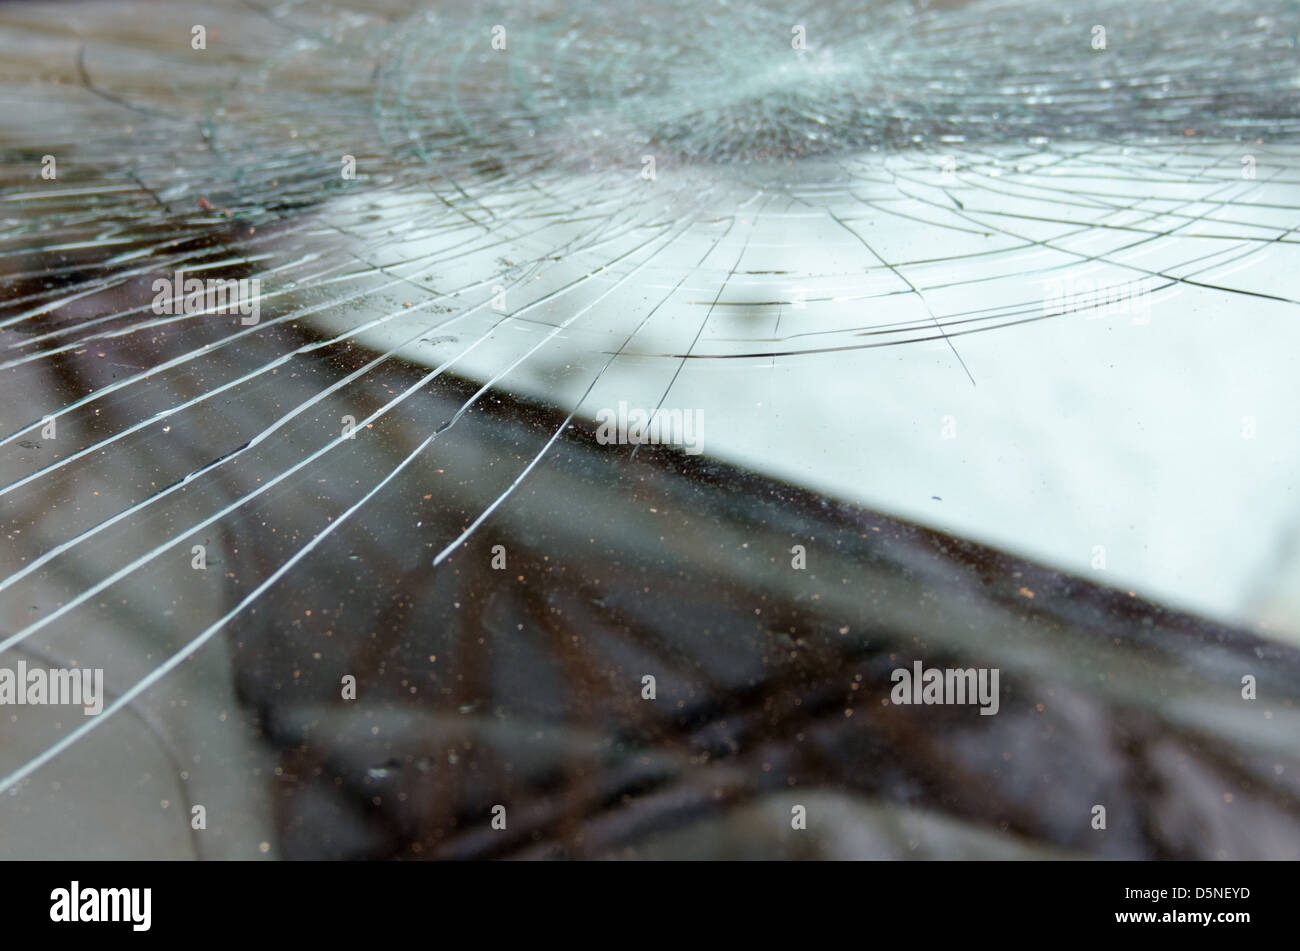 Smashed windshield with spiderweb-pattern cracks. Stock Photo